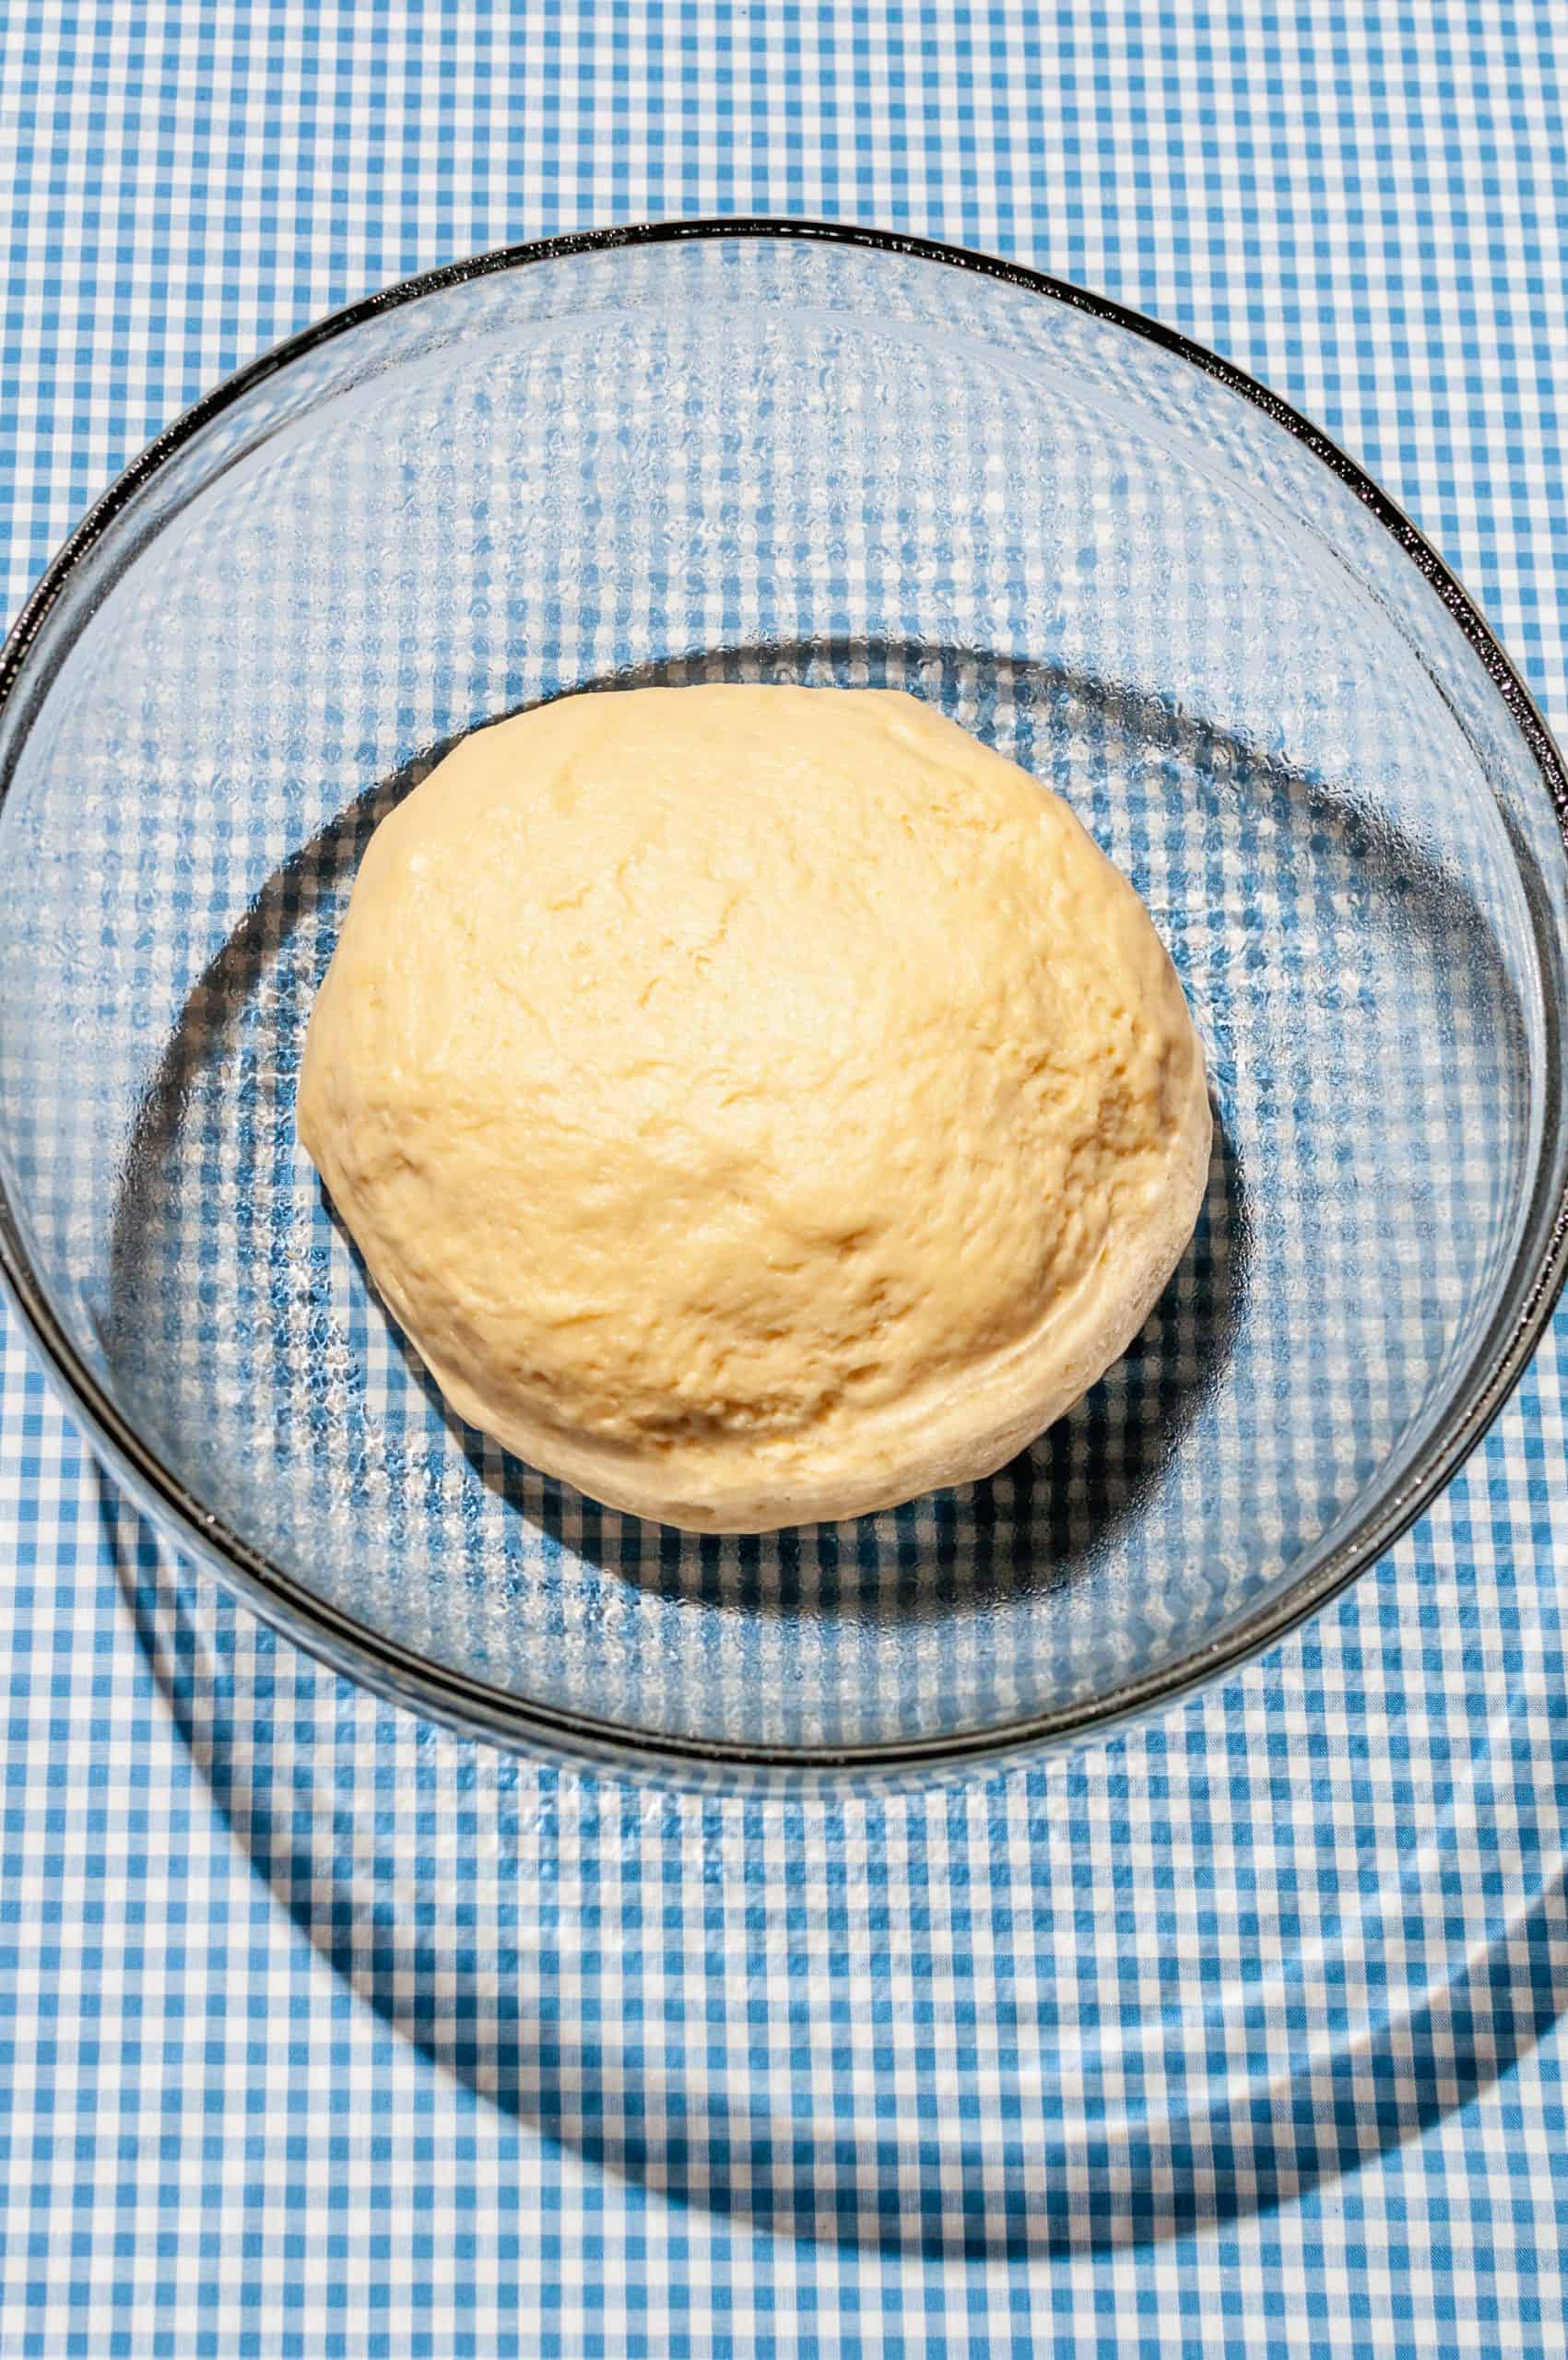 ball of sticky bun dough in a glass bowl